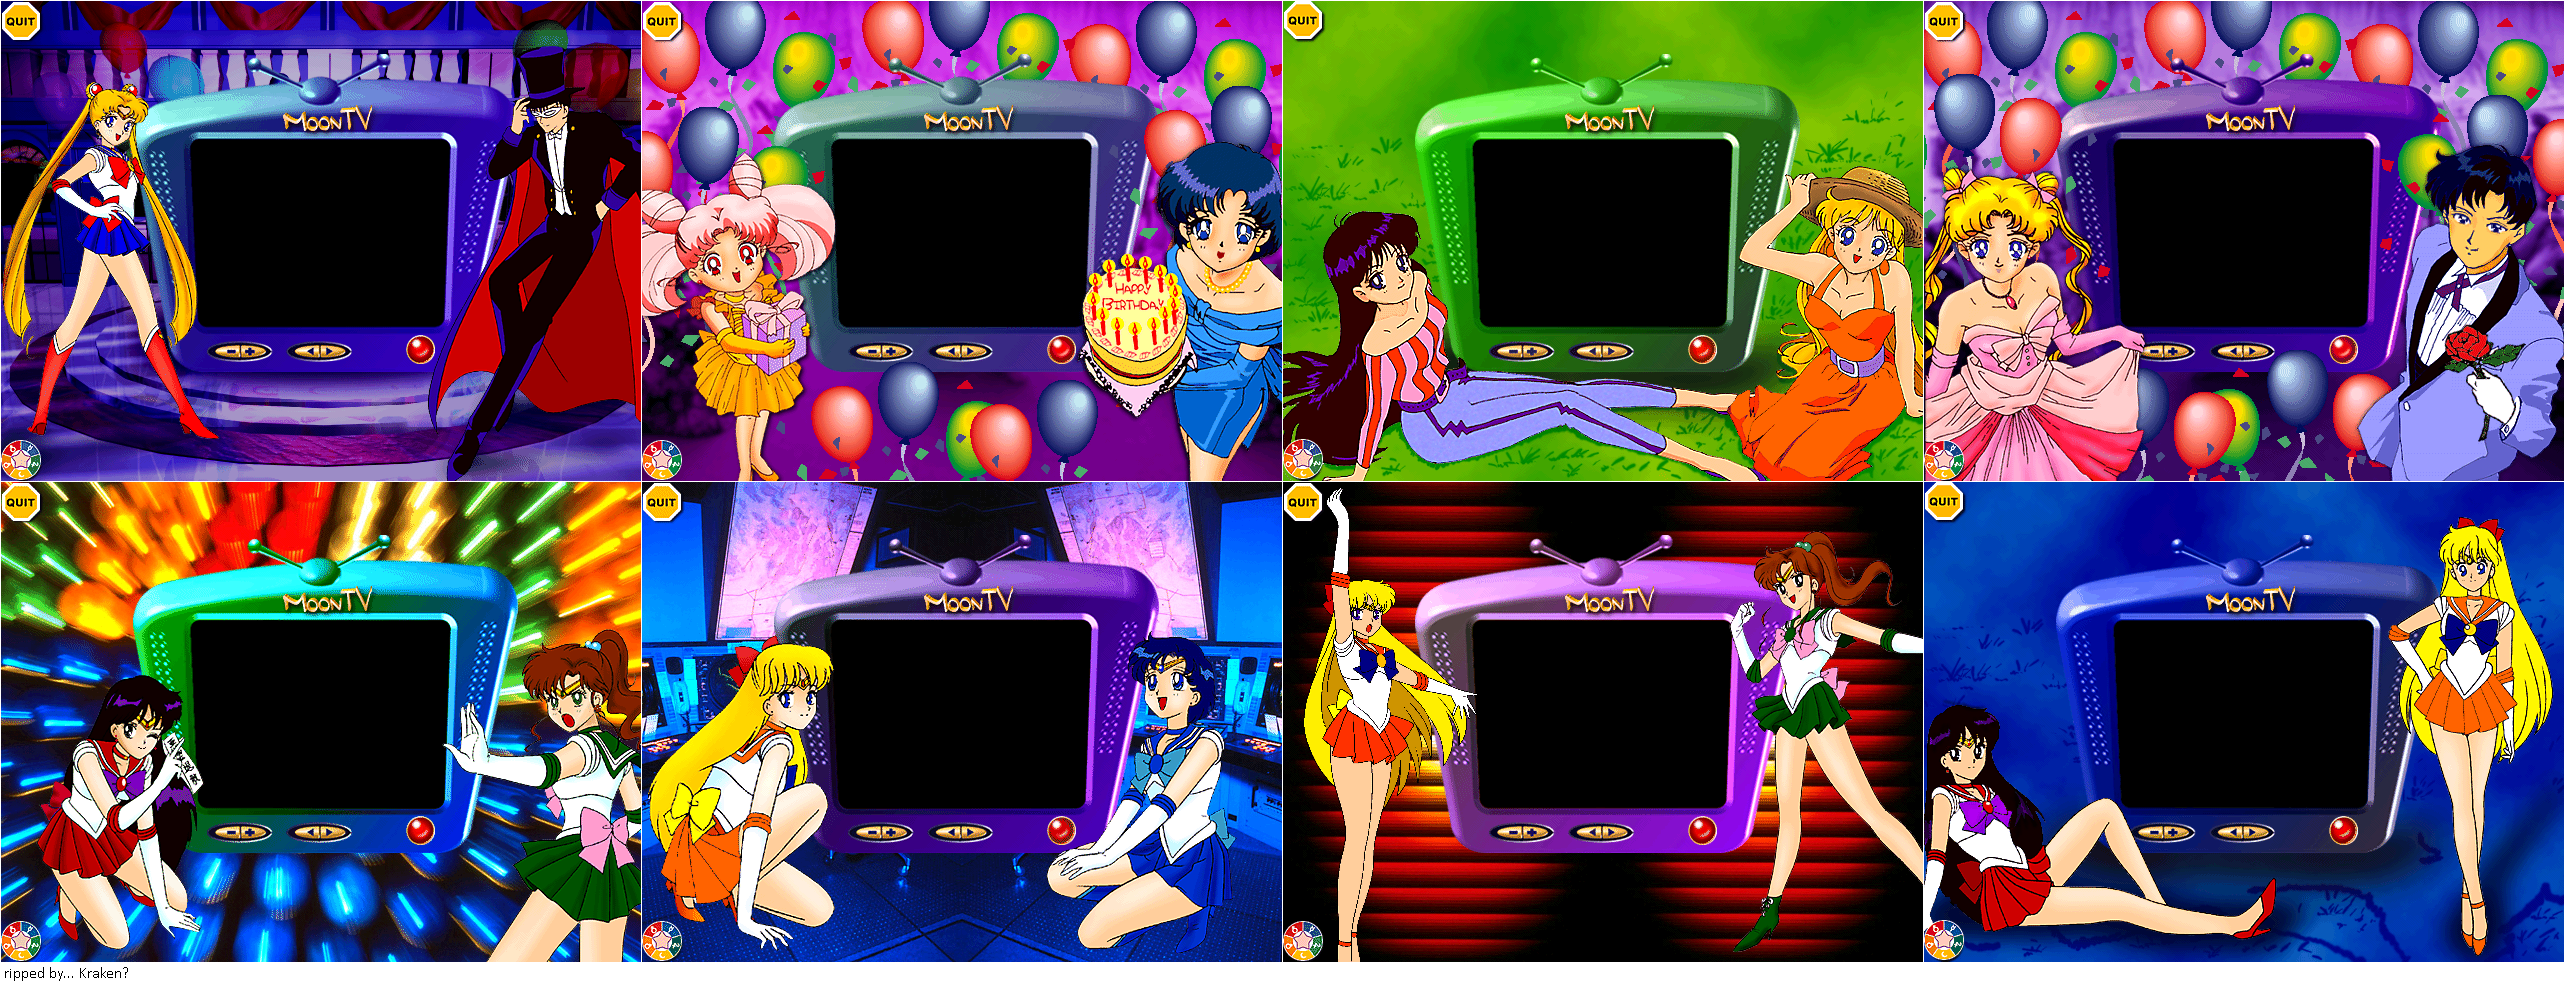 3D Adventures of Sailor Moon - Frames